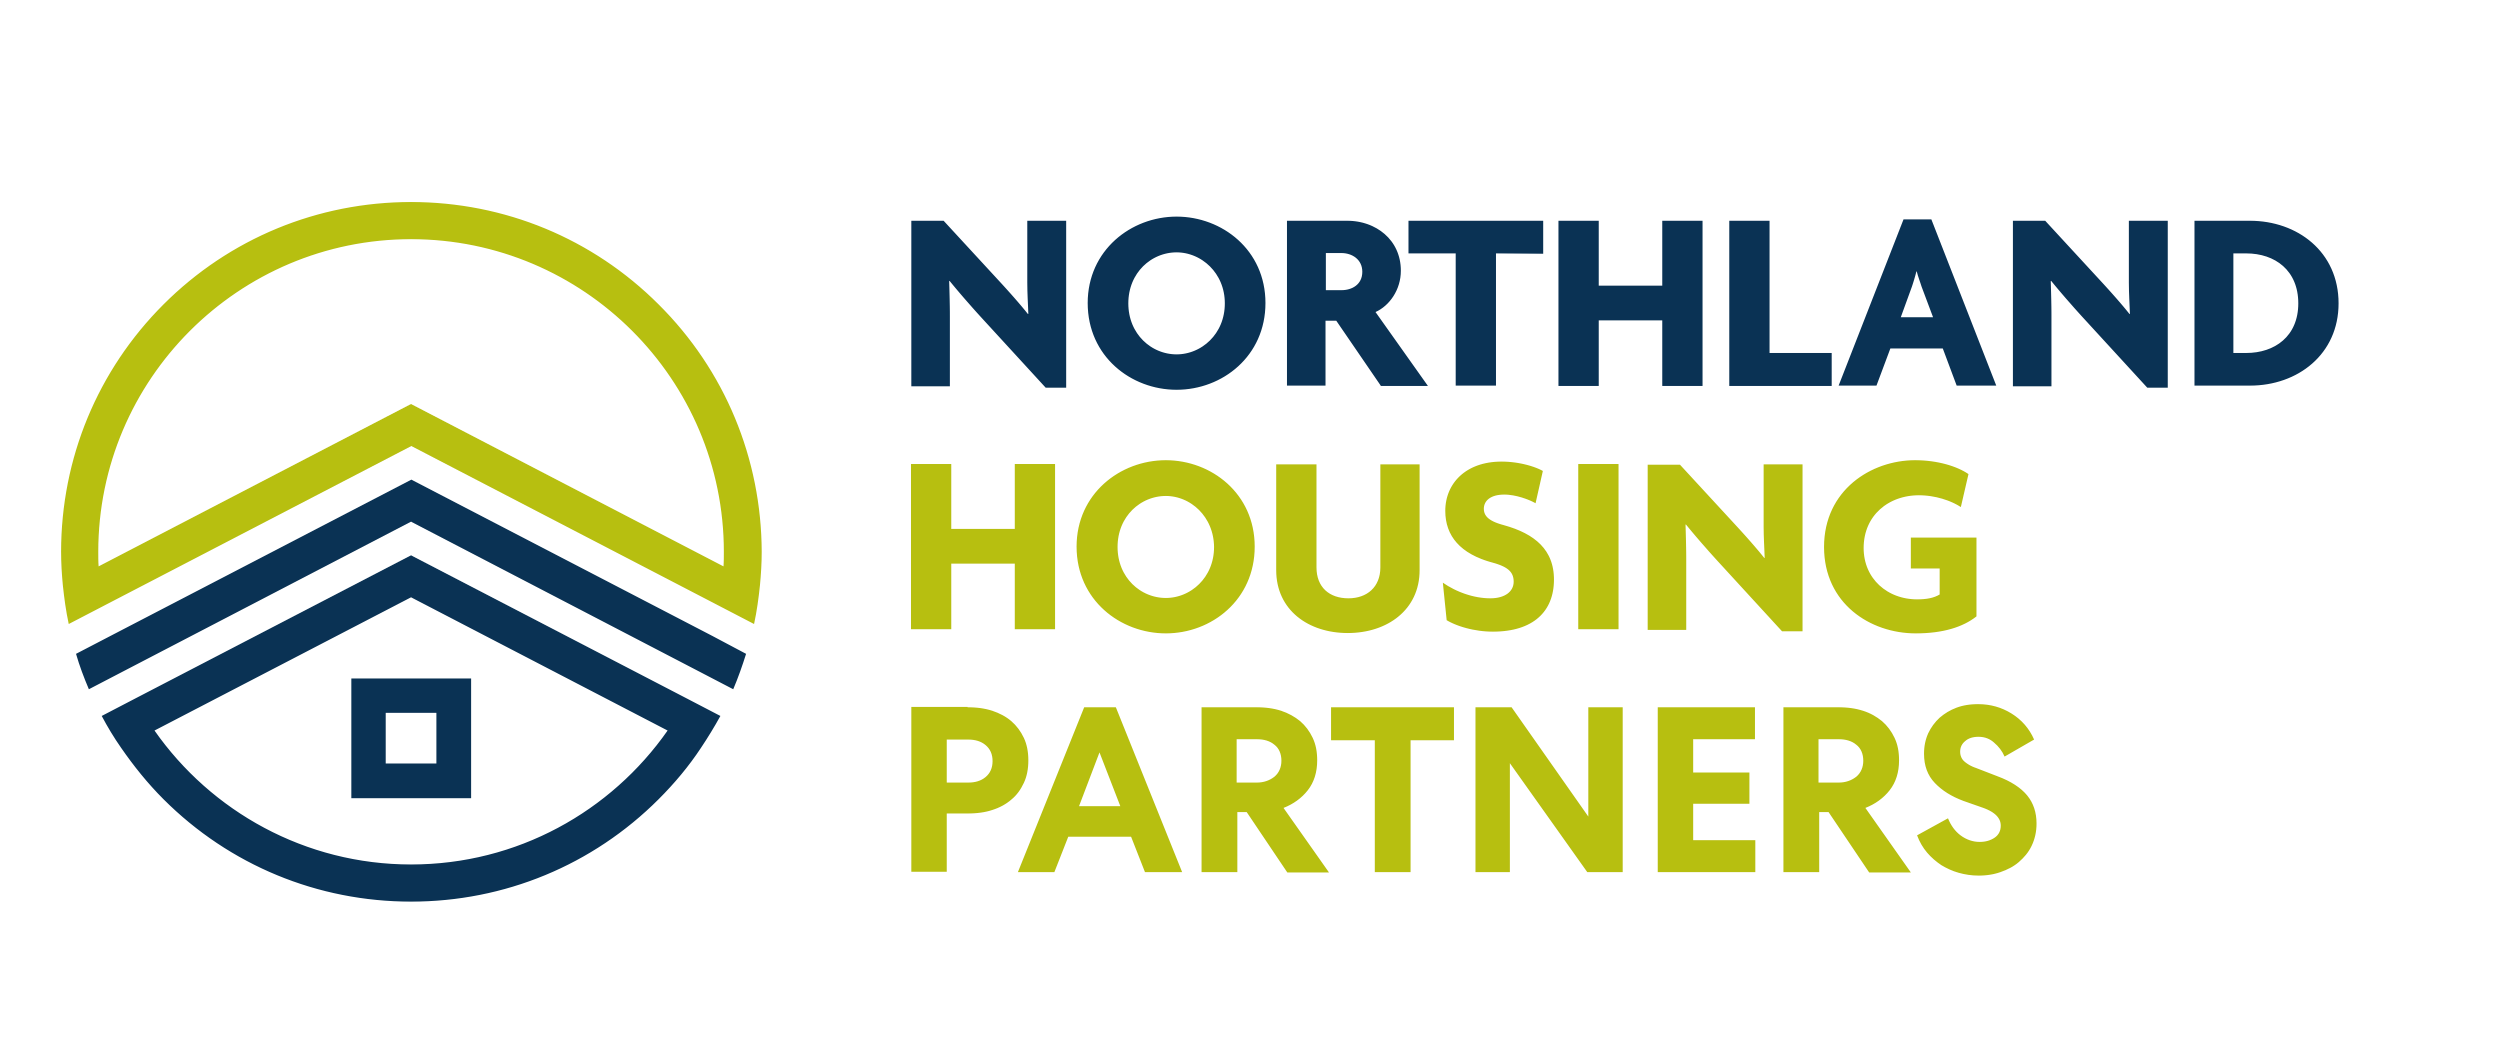 Northland Housing Partners logo